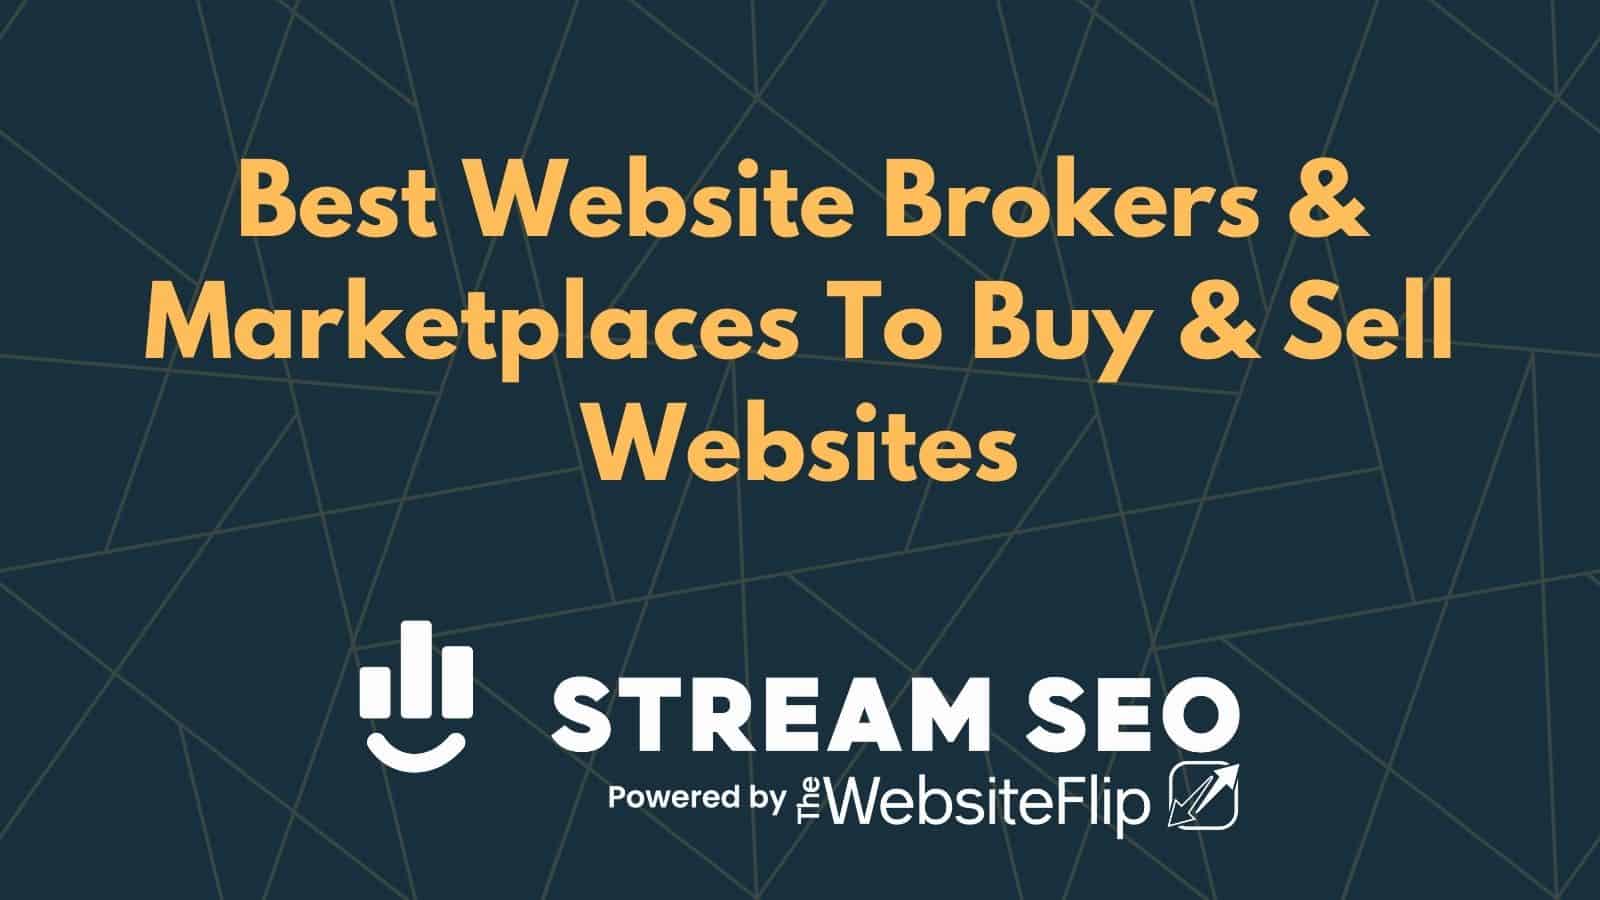 Best Website Brokers & Marketplaces To Buy & Sell Websites